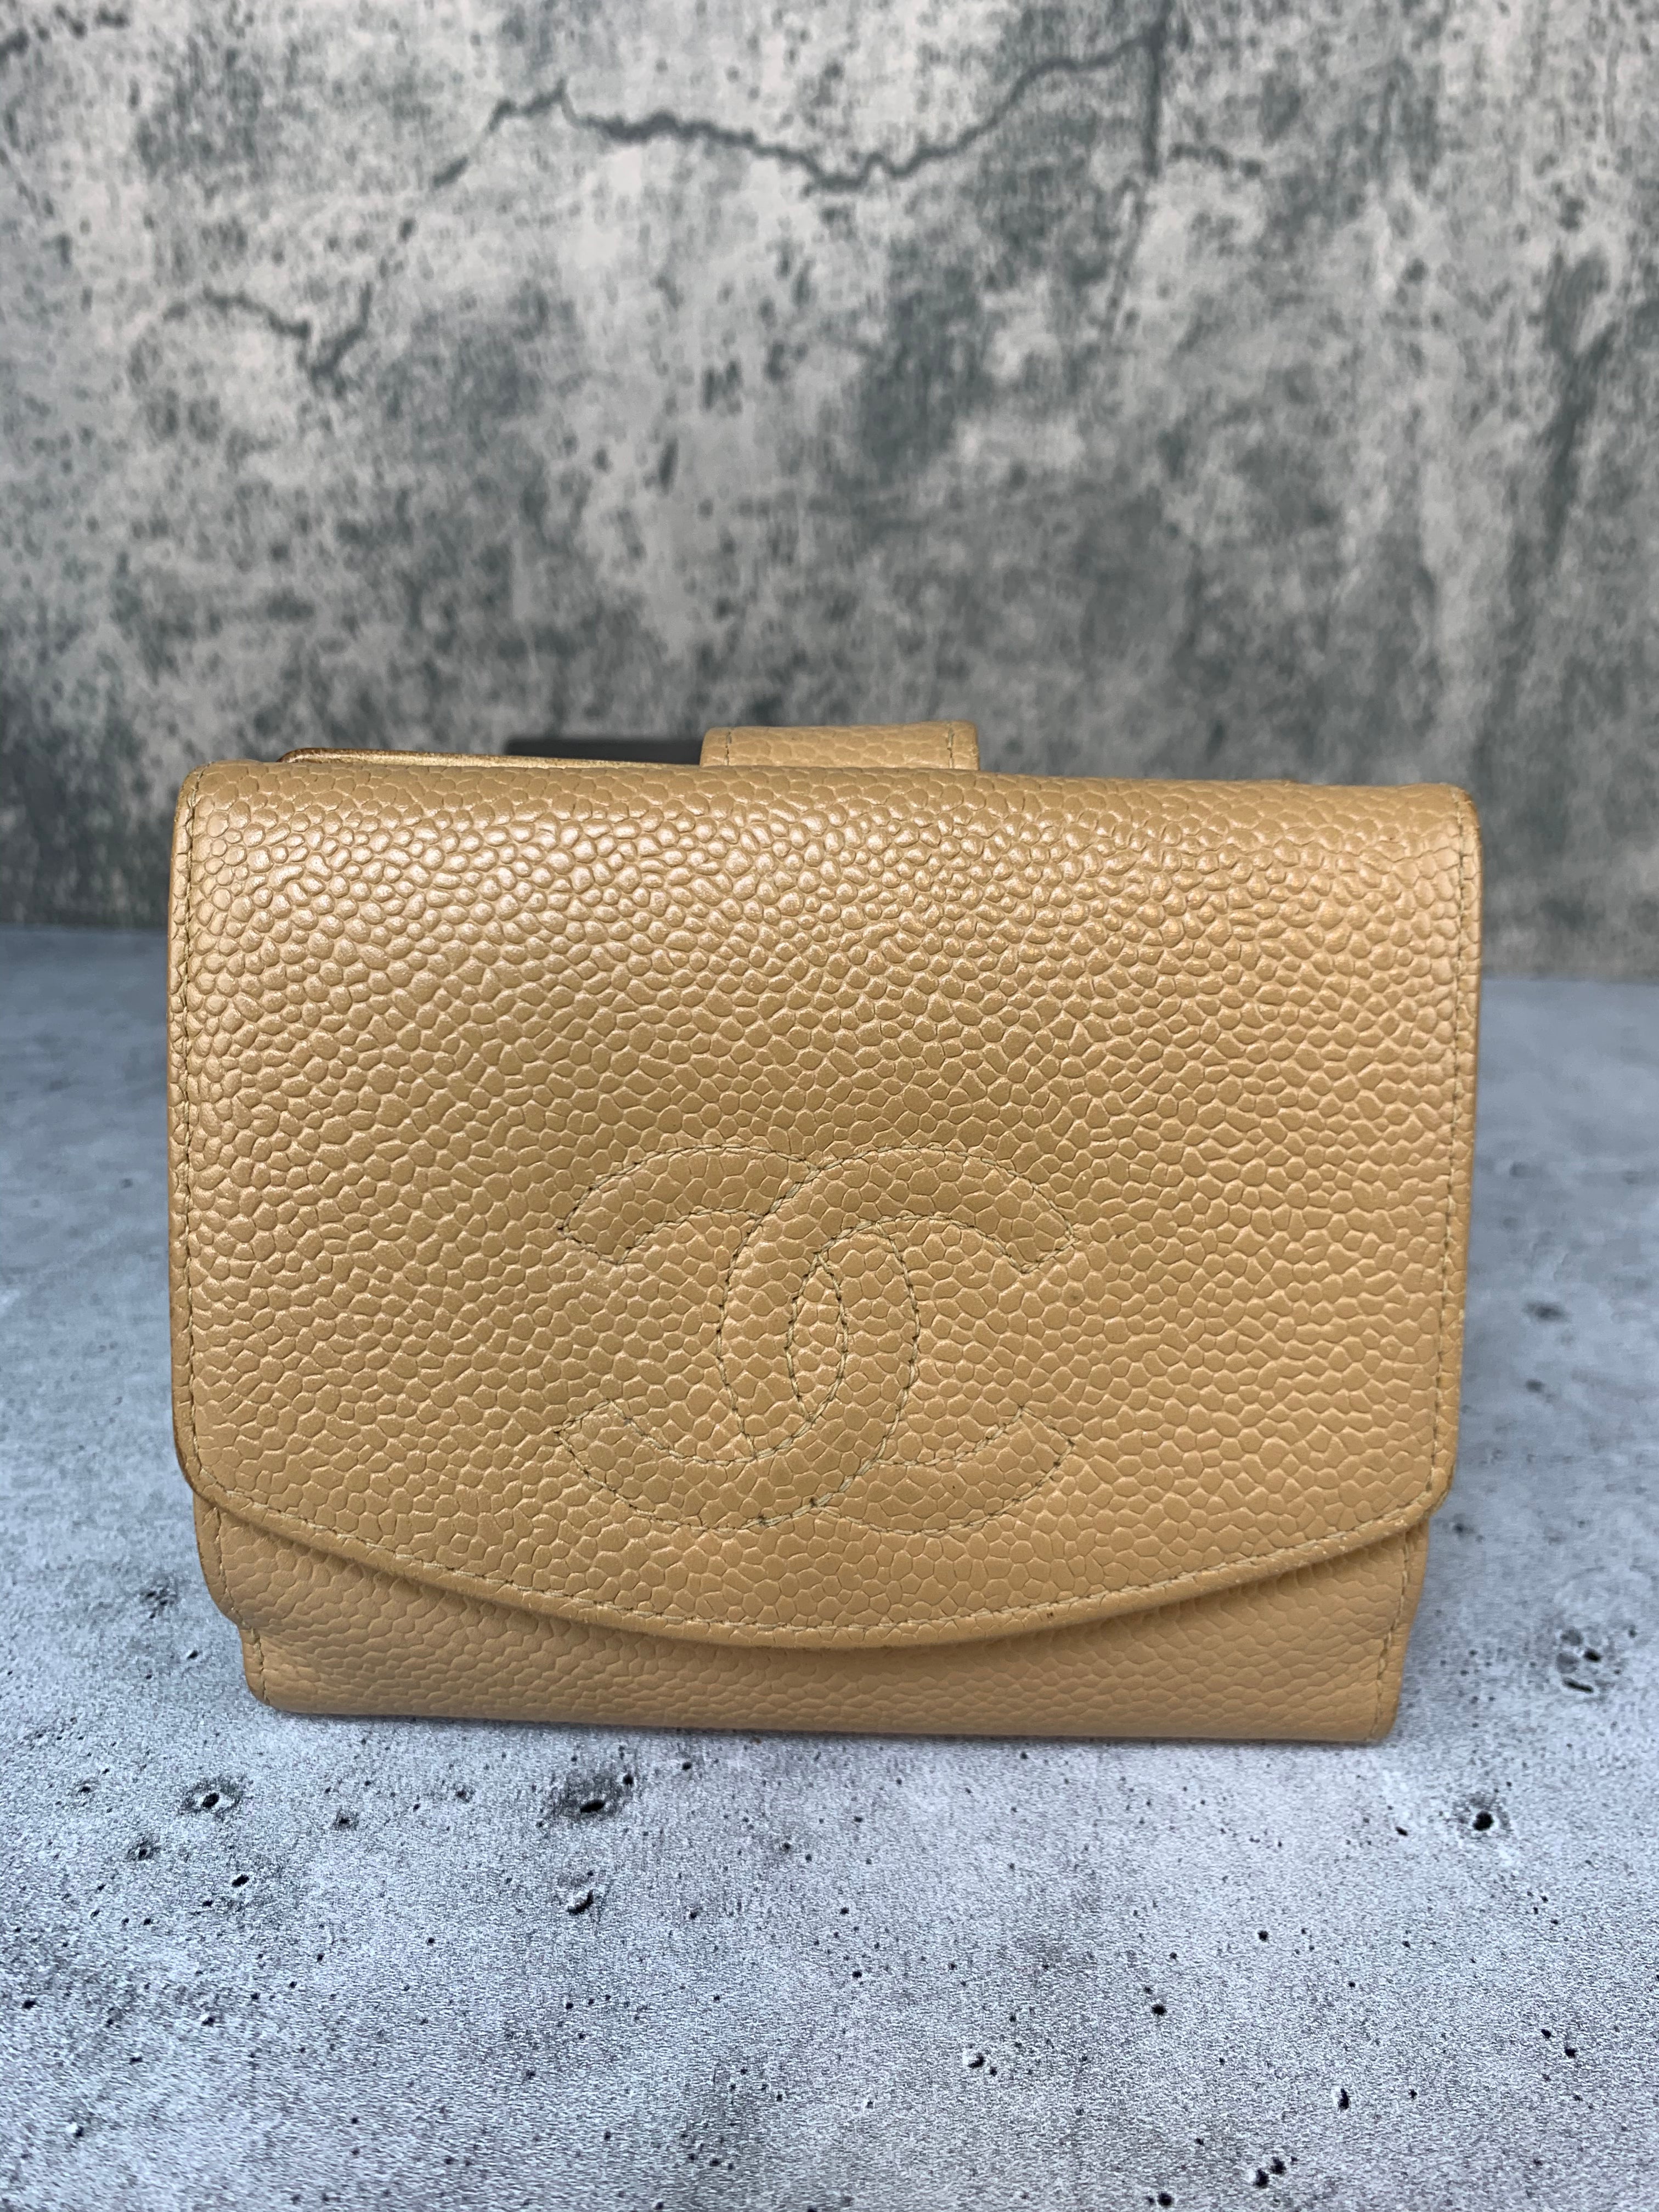 Chanel chain wallet - Gem